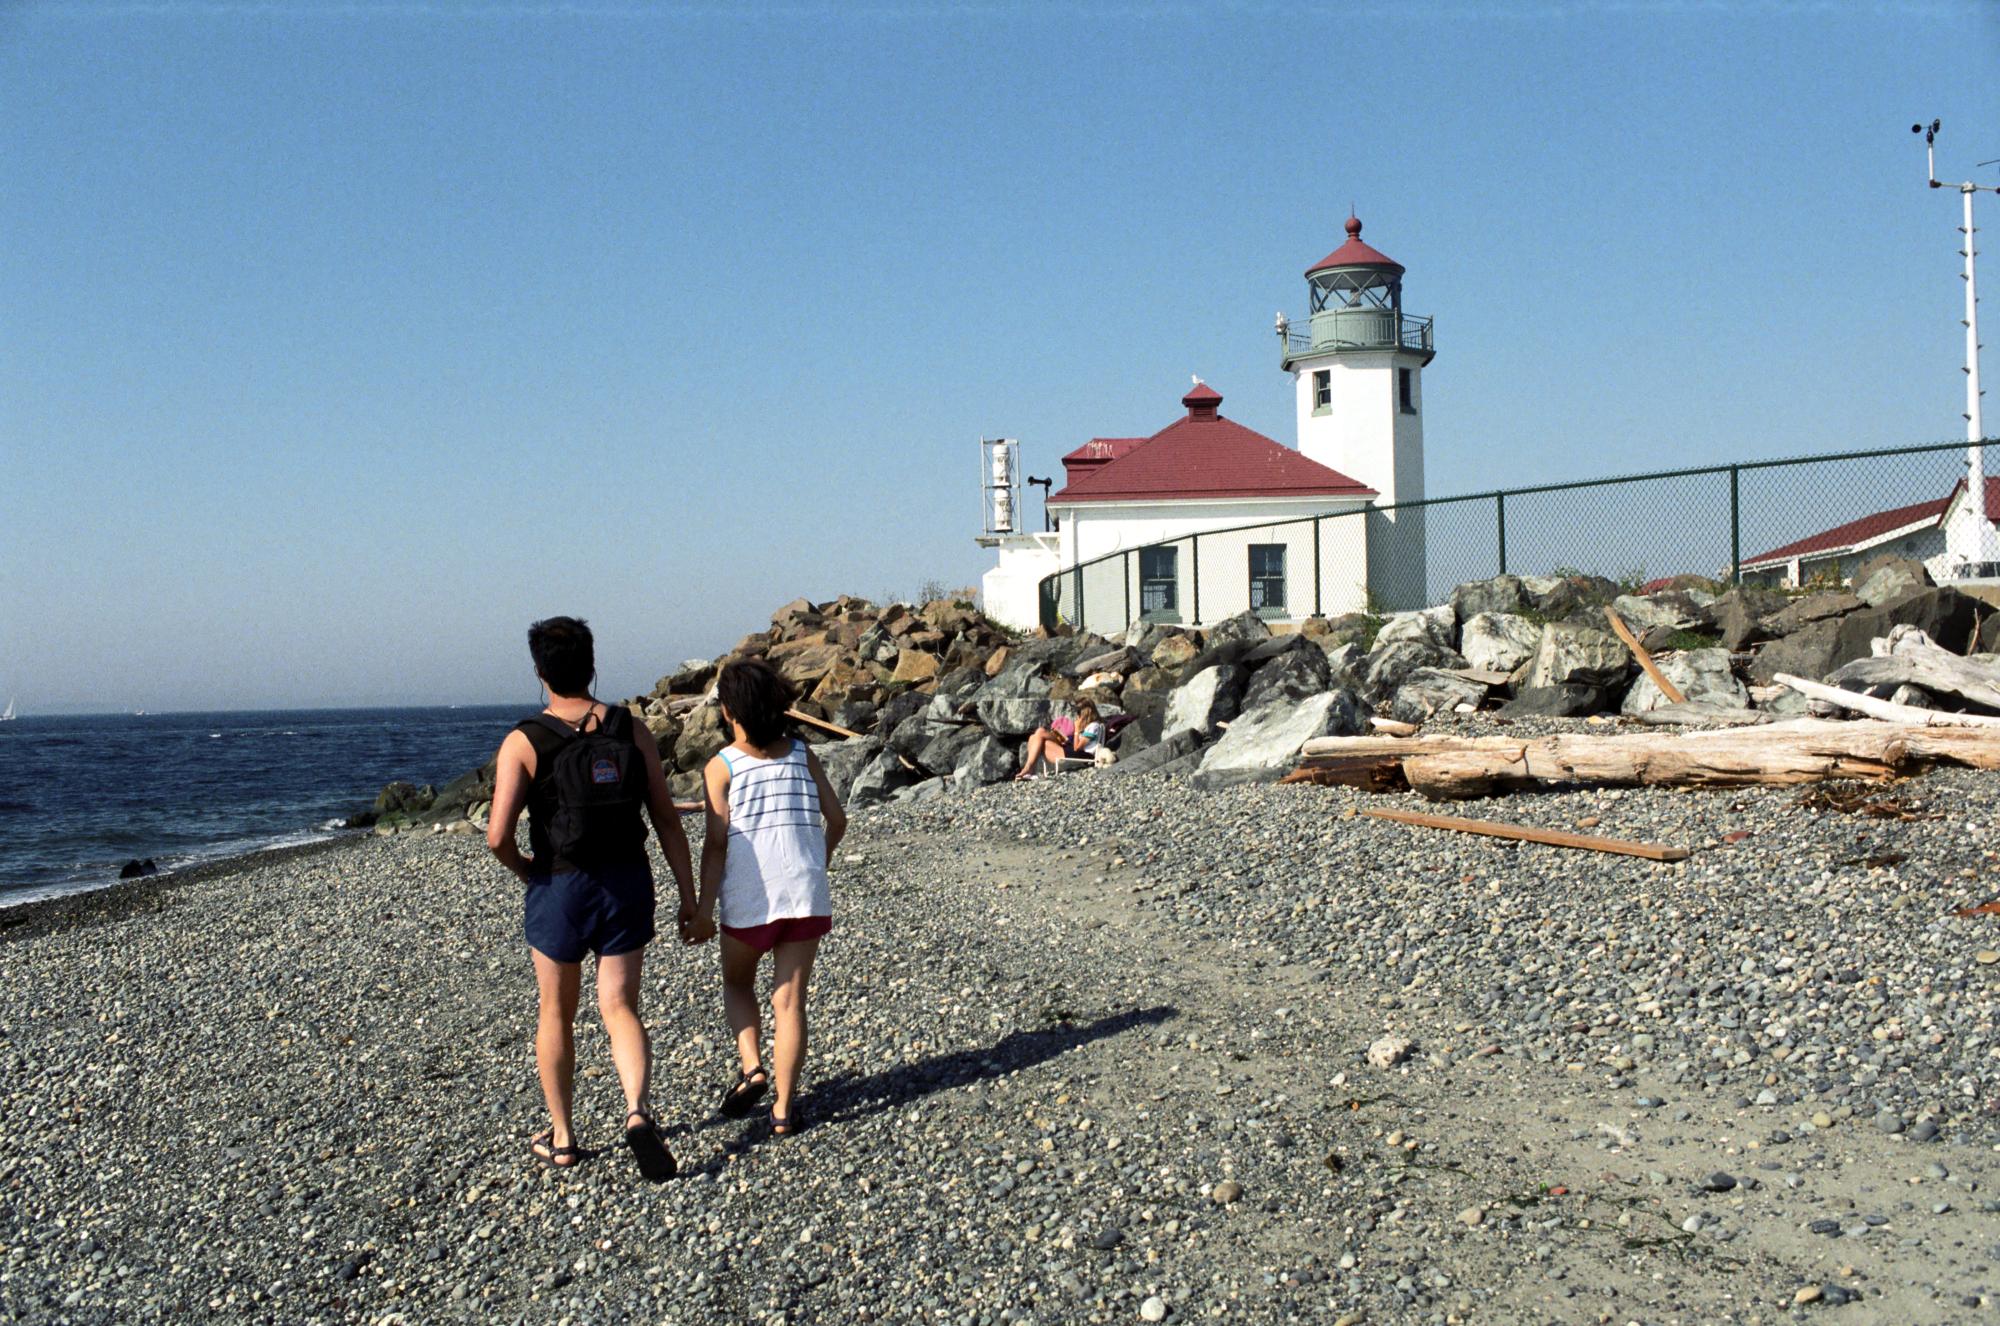 Seattle (1993) - David Victoria Alki Beach #1